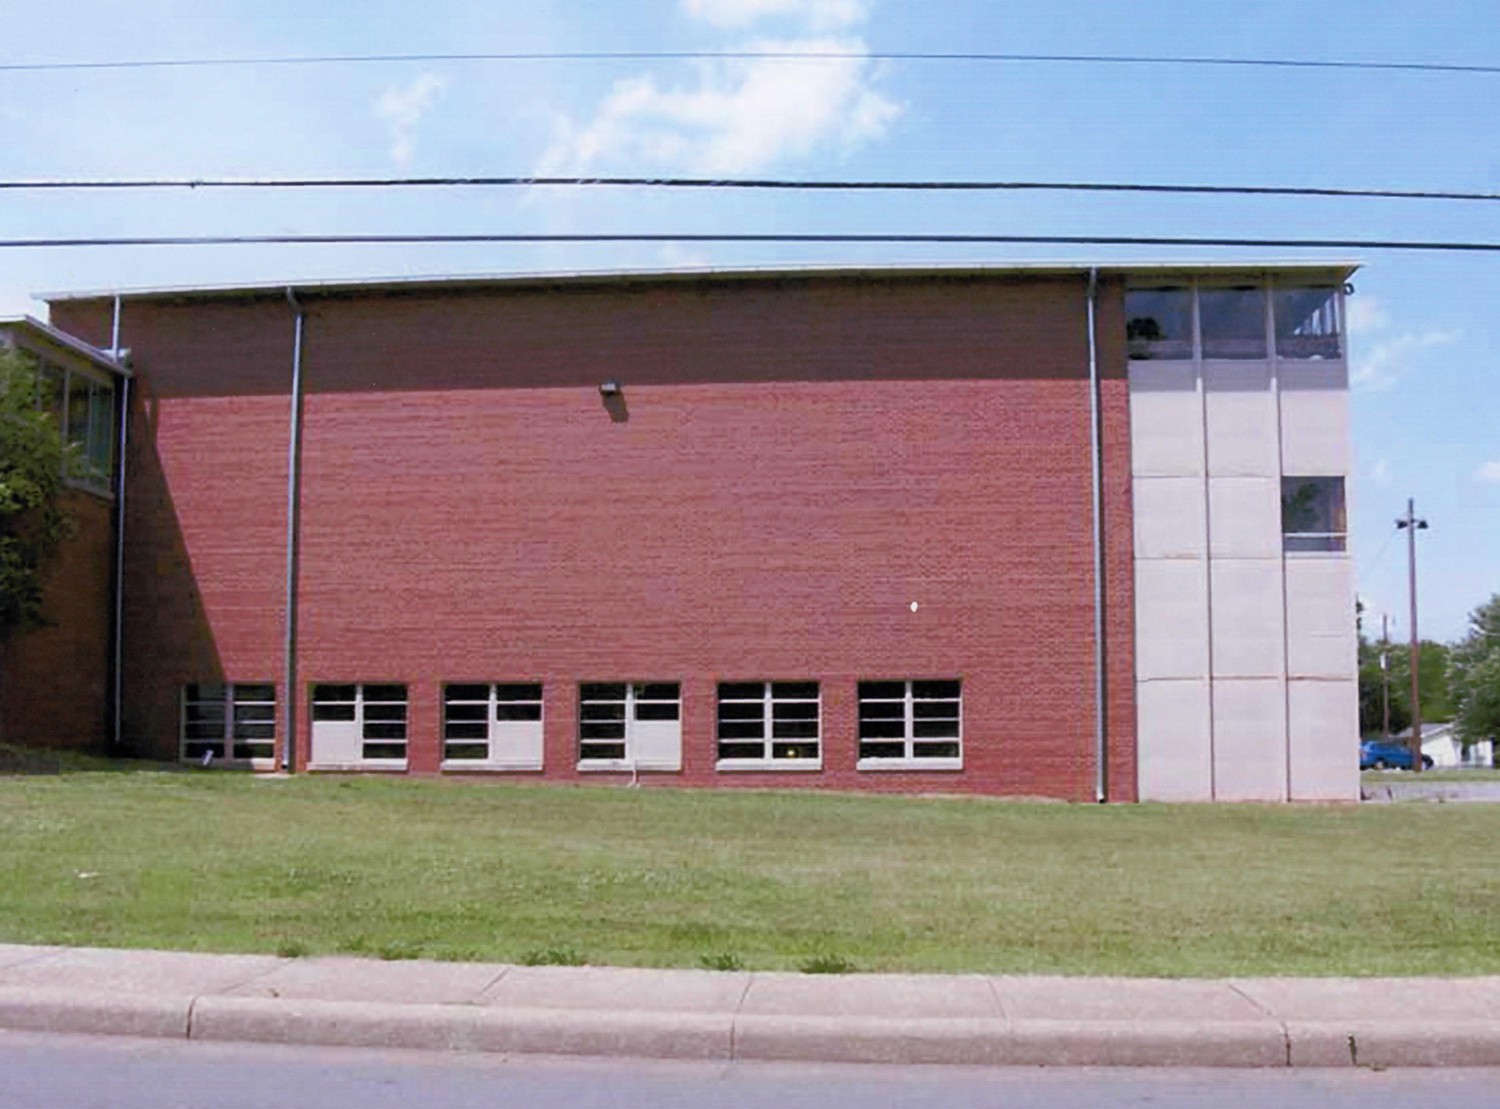 Attucks High School, Hopkinsville Kentucky South elevation of gymnasium (2012)